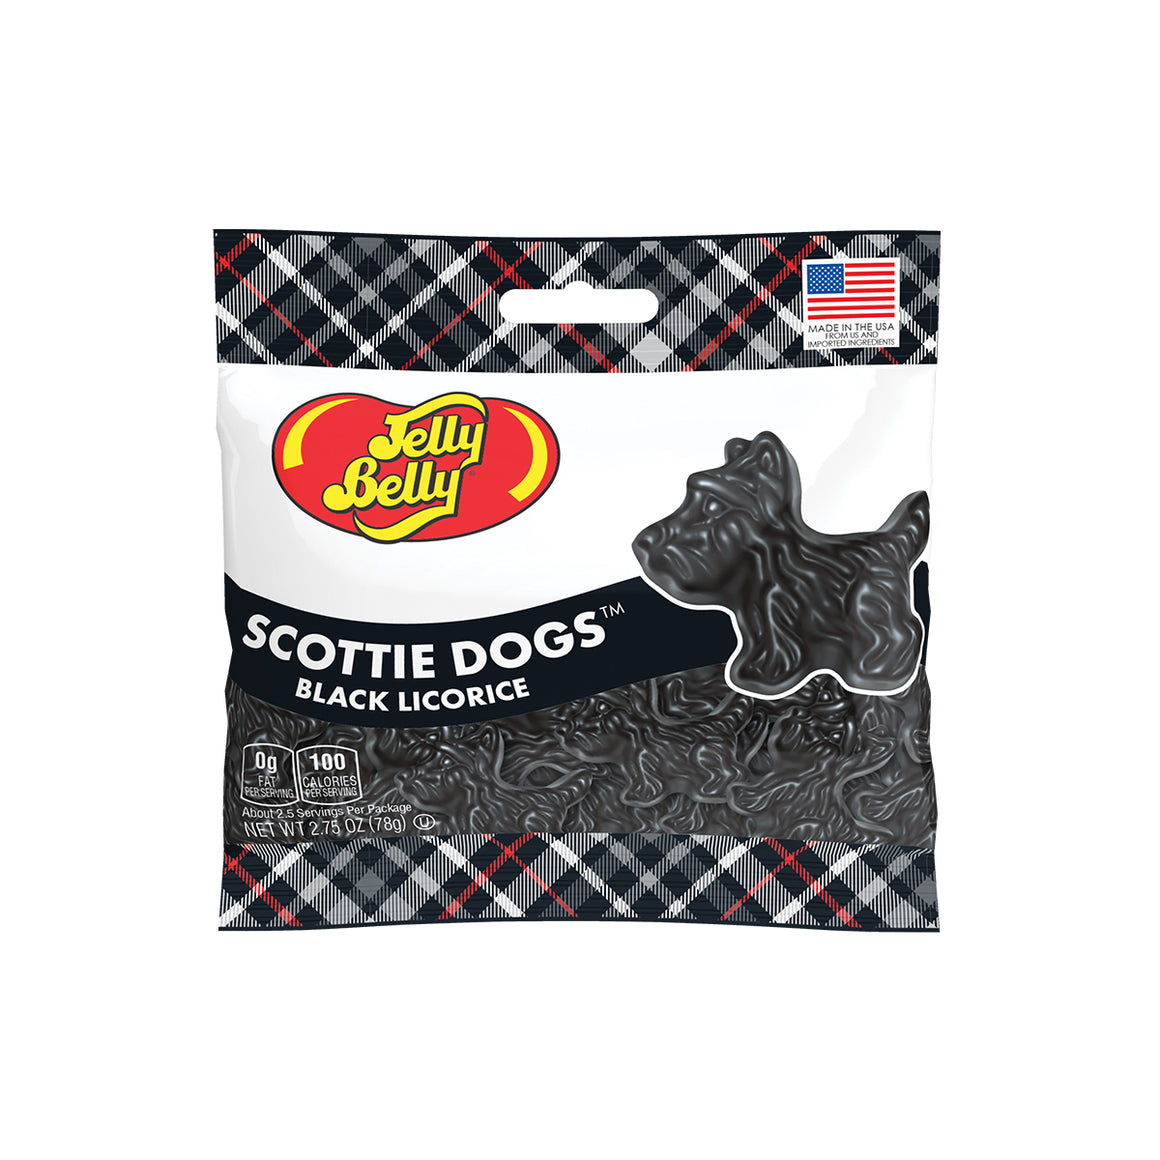 Jelly Belly Black Licorice Scottie Dogs - 2.75-oz. Bag